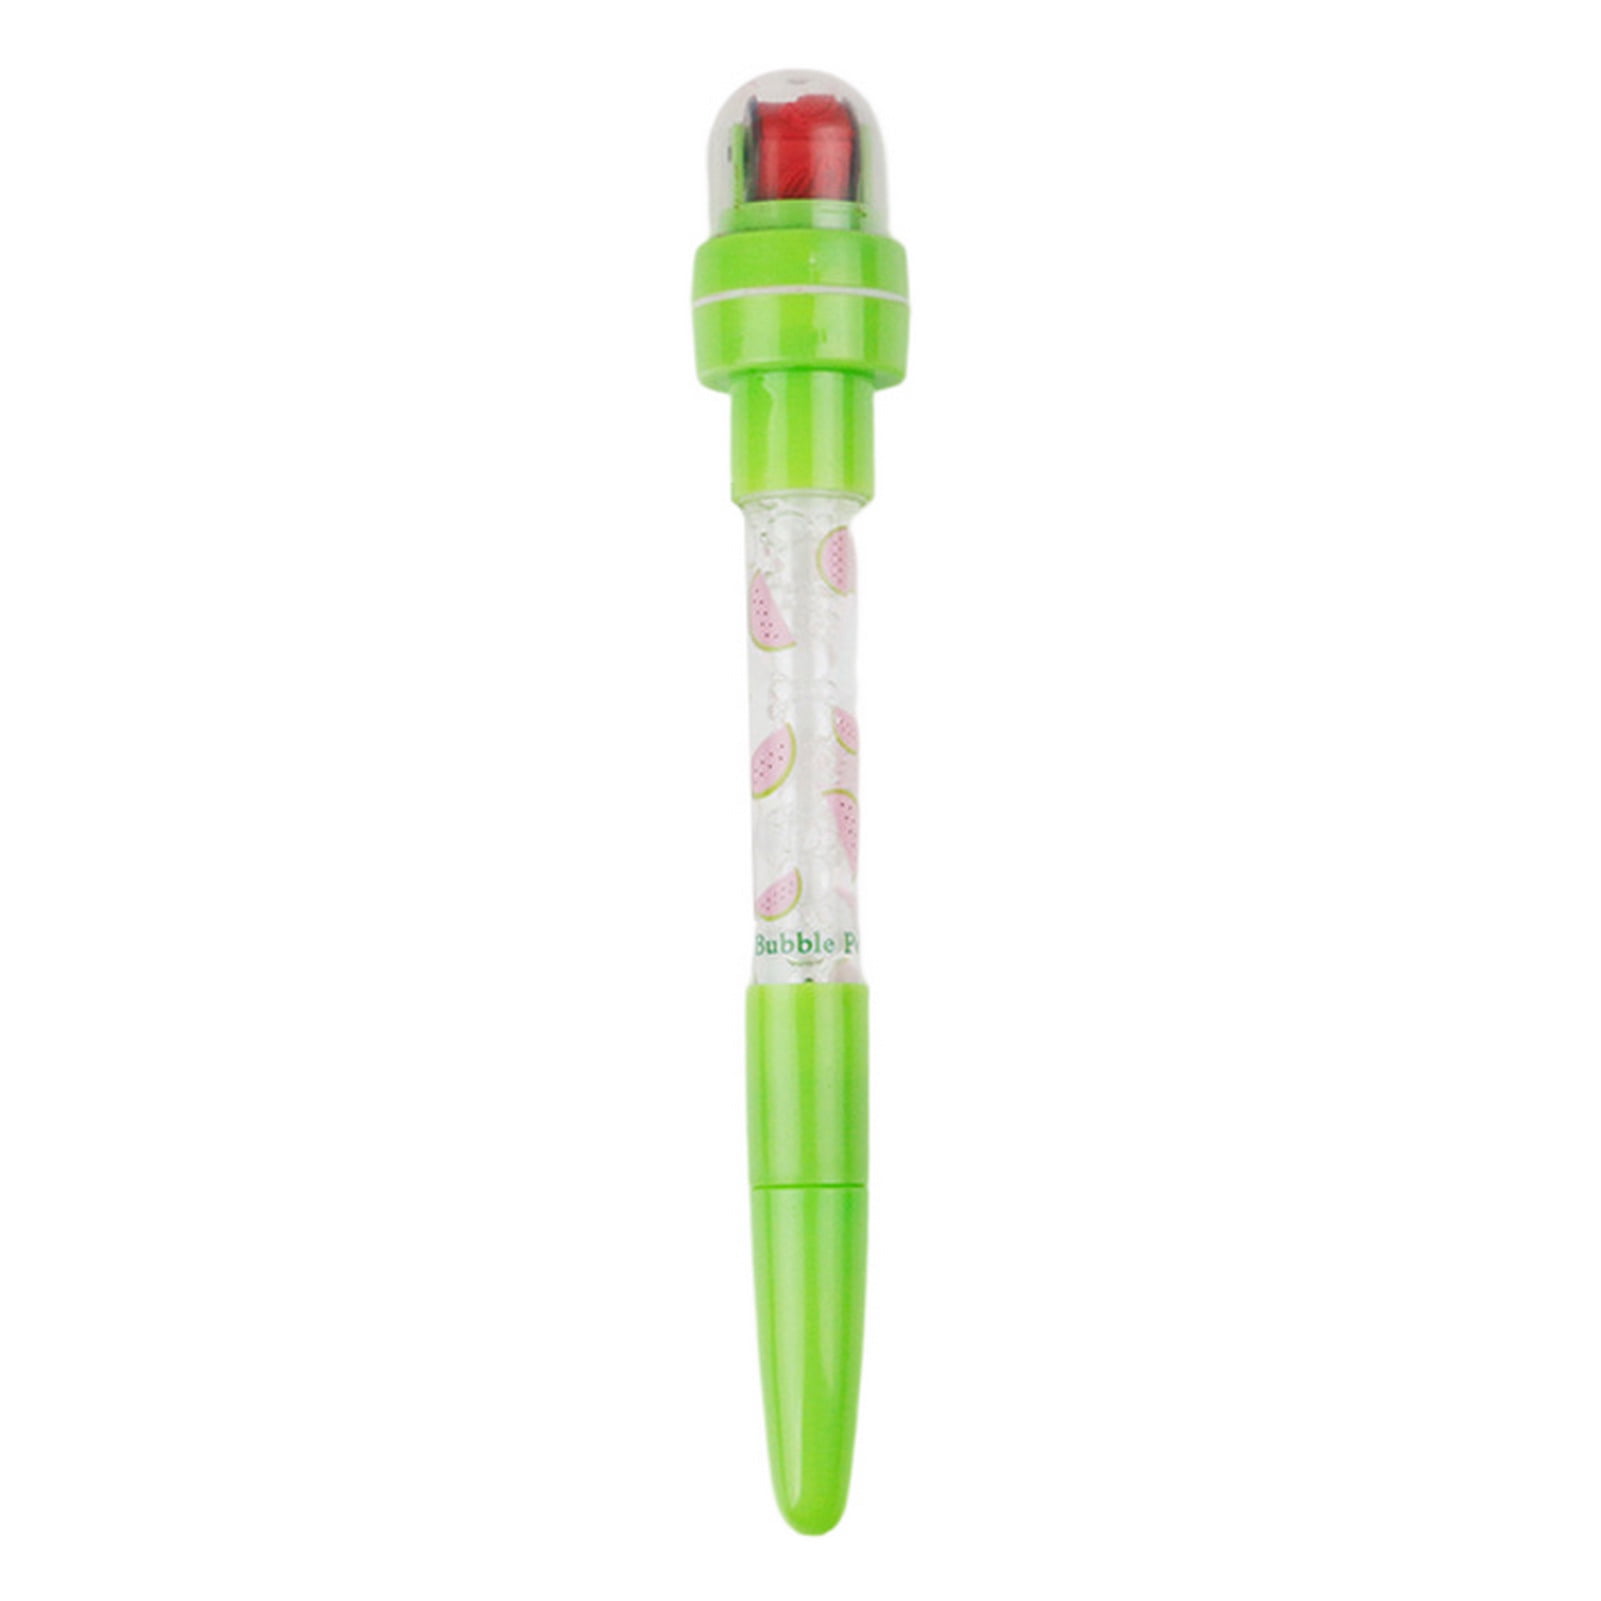 Buy Bubble Roller Pen online